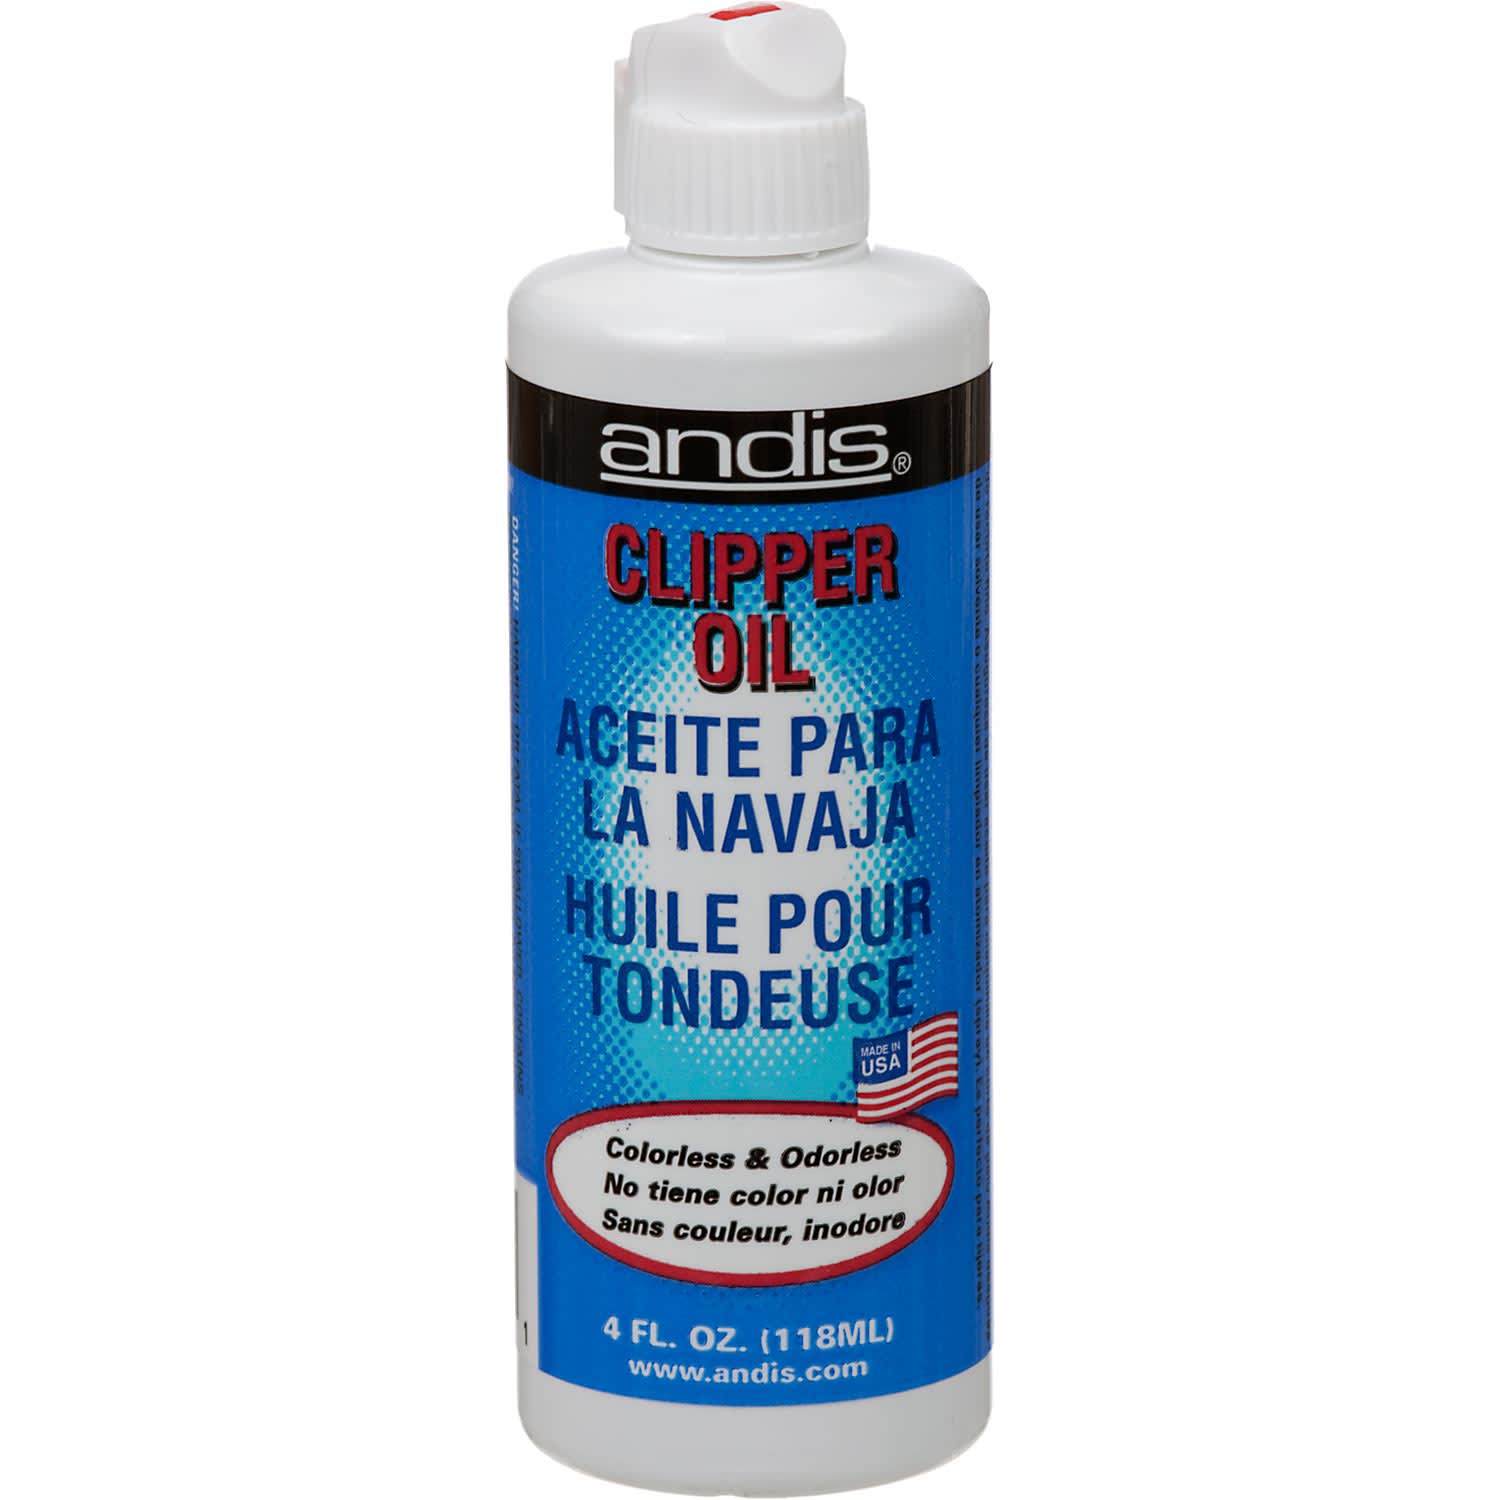 electric clipper oil use